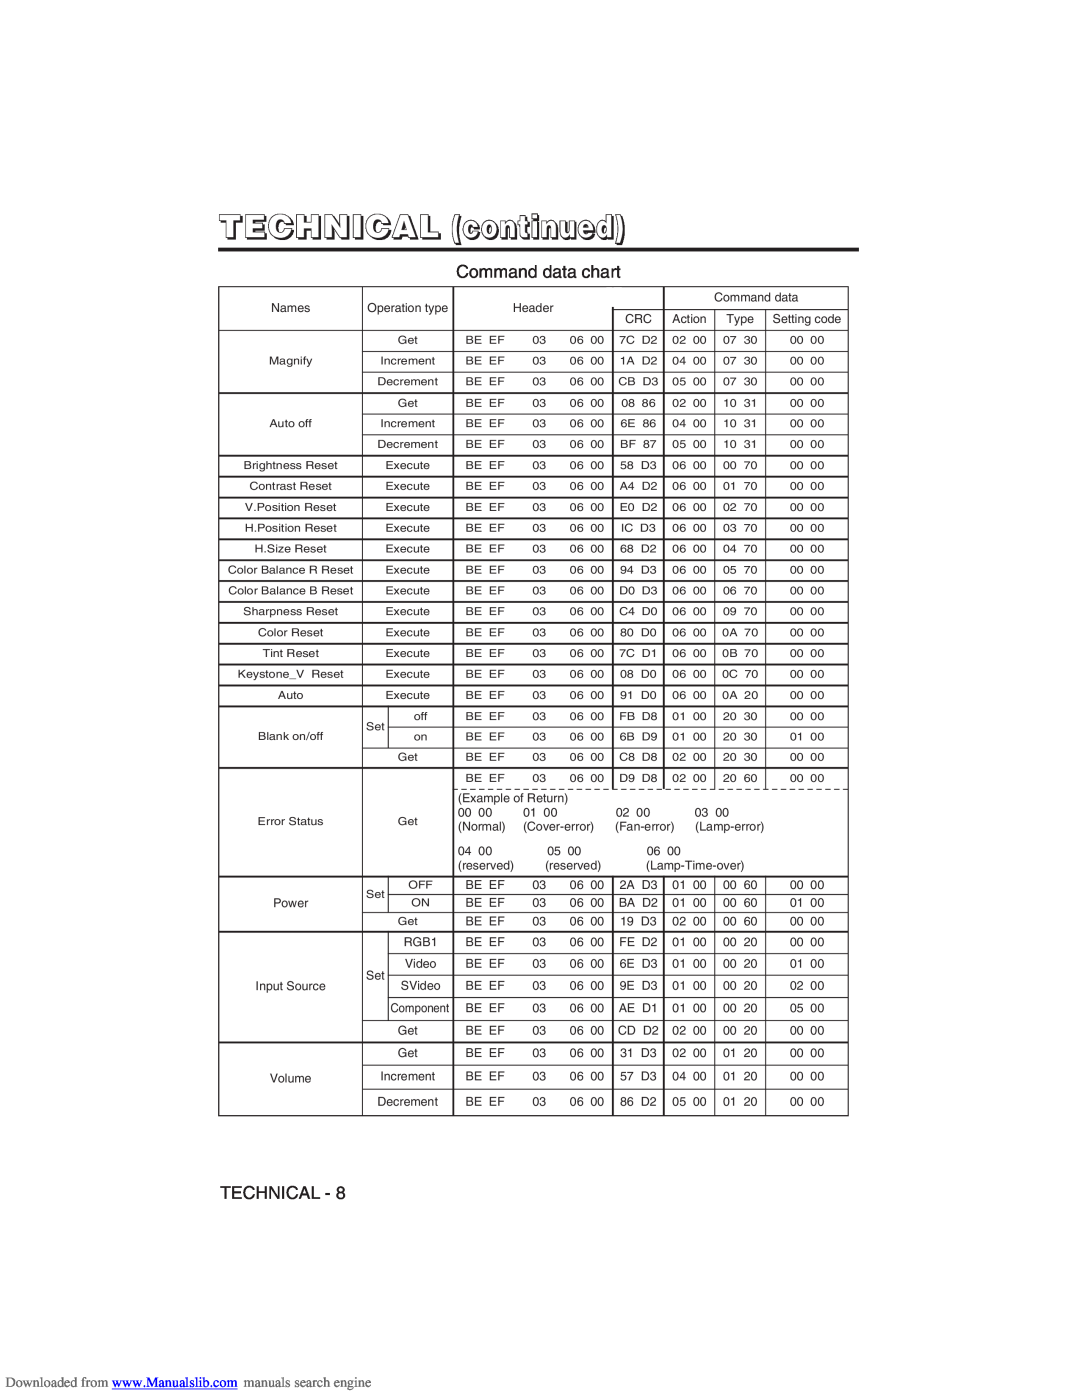 Hitachi CP-X275W user manual TECHNICAL continued, Names 